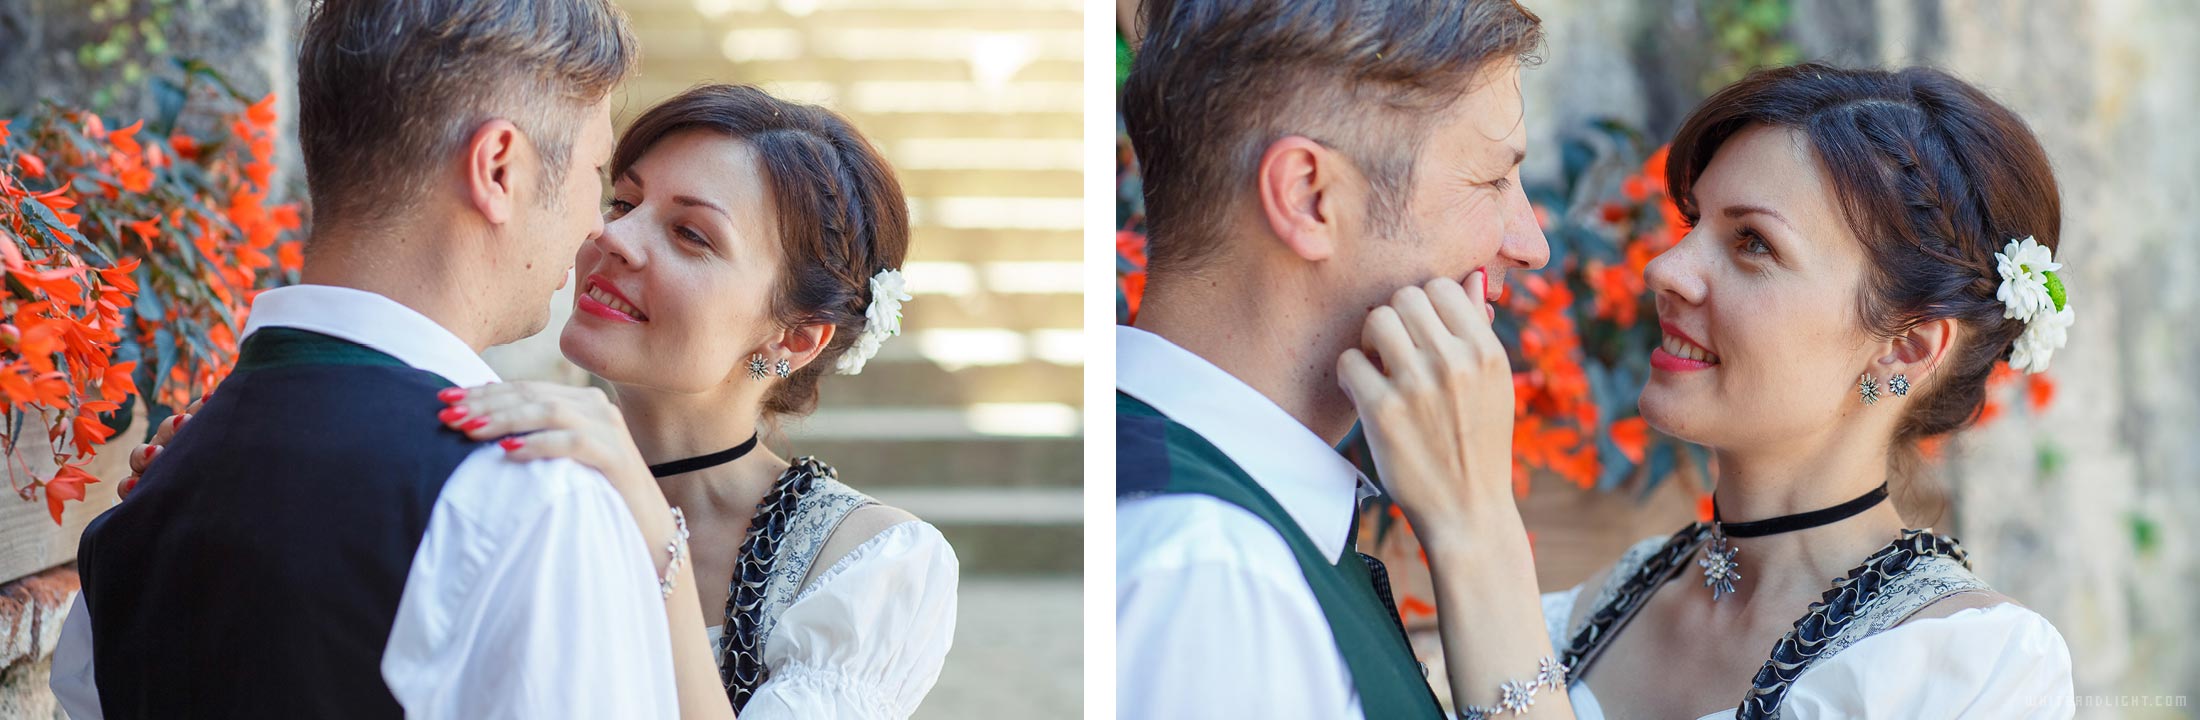 Bavarian wedding dress - portrait photographer munich